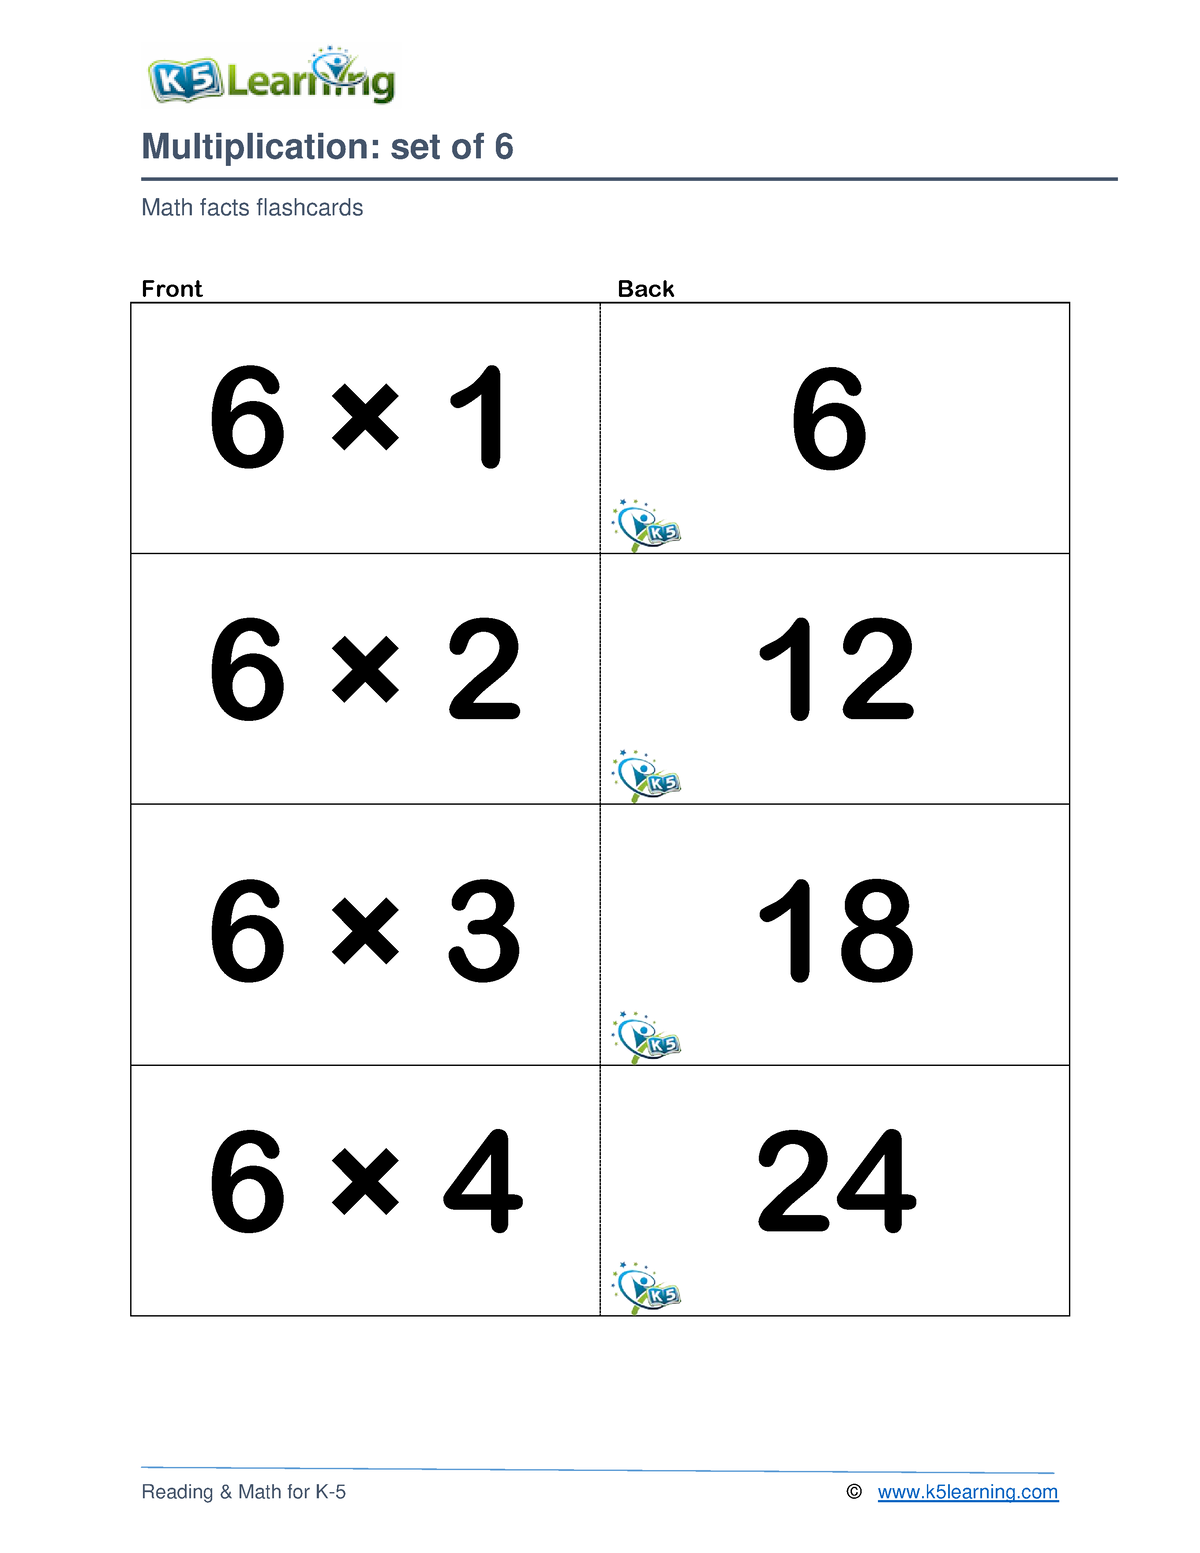 multiplication-set-6-7-8-math-facts-flashcards-front-back-6-1-6-6